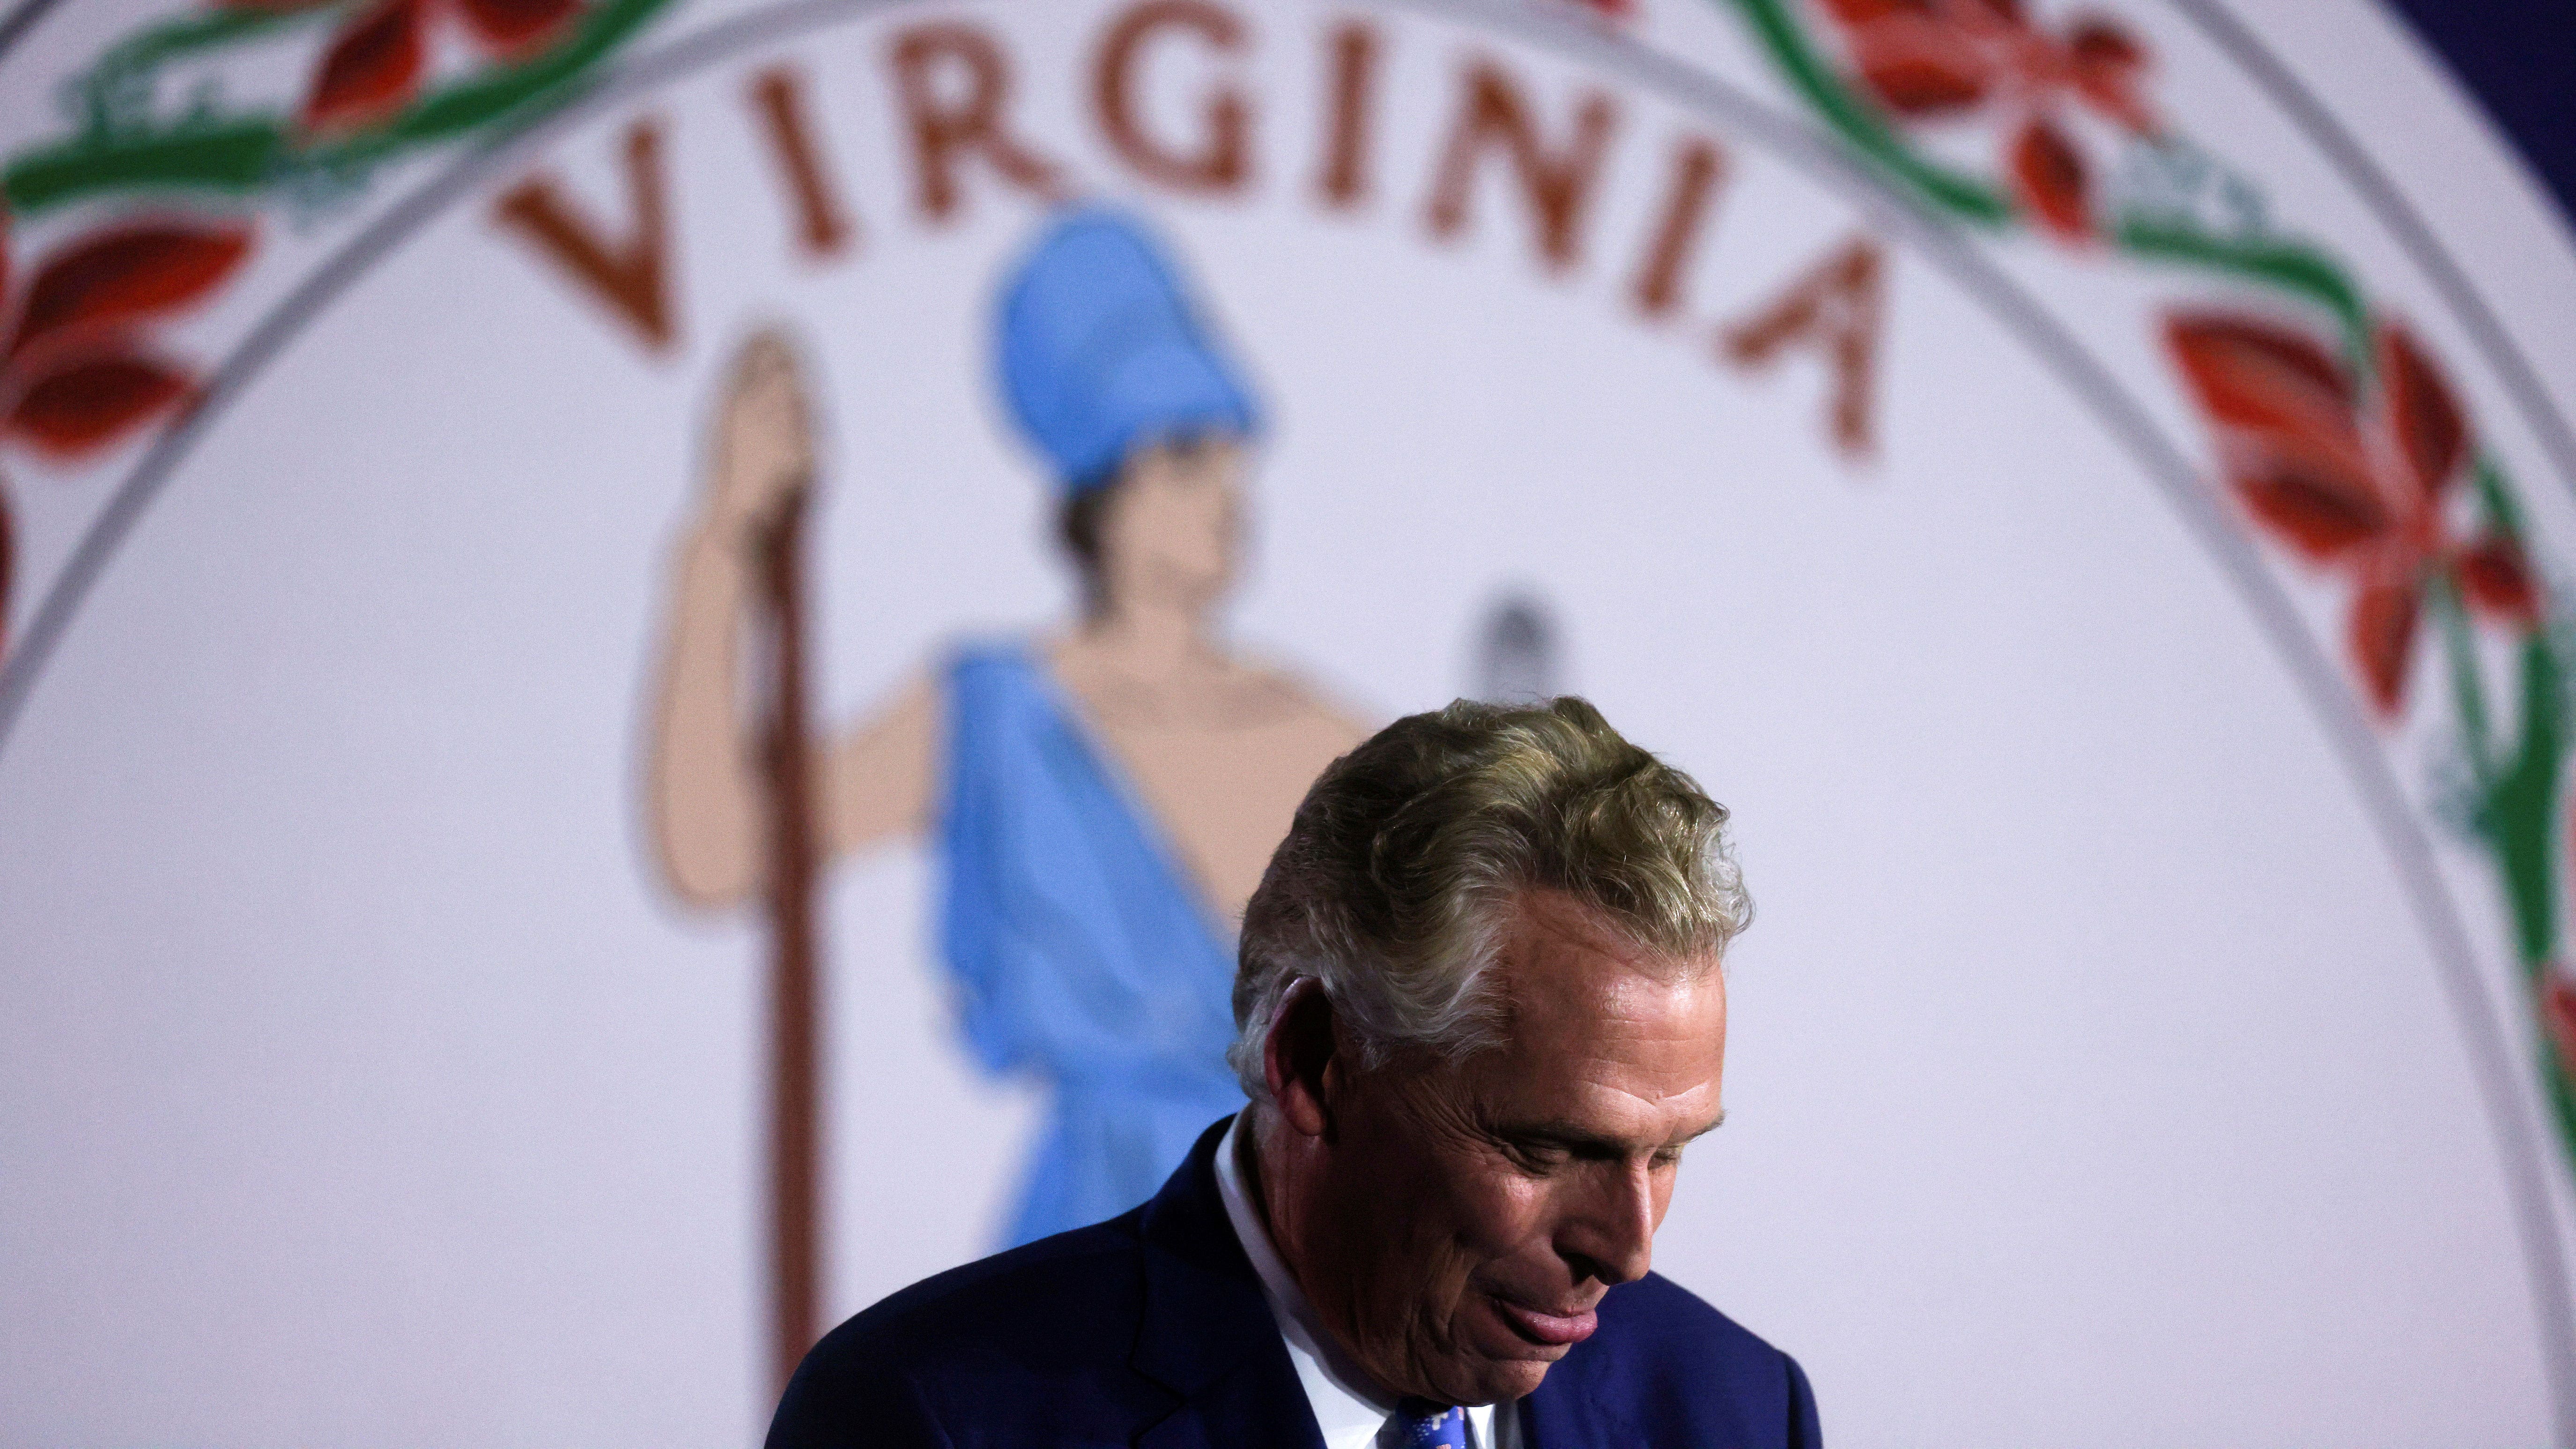 Democrat blame game begins after major Virginia loss, criticism hurled at moderates, progressives and Biden